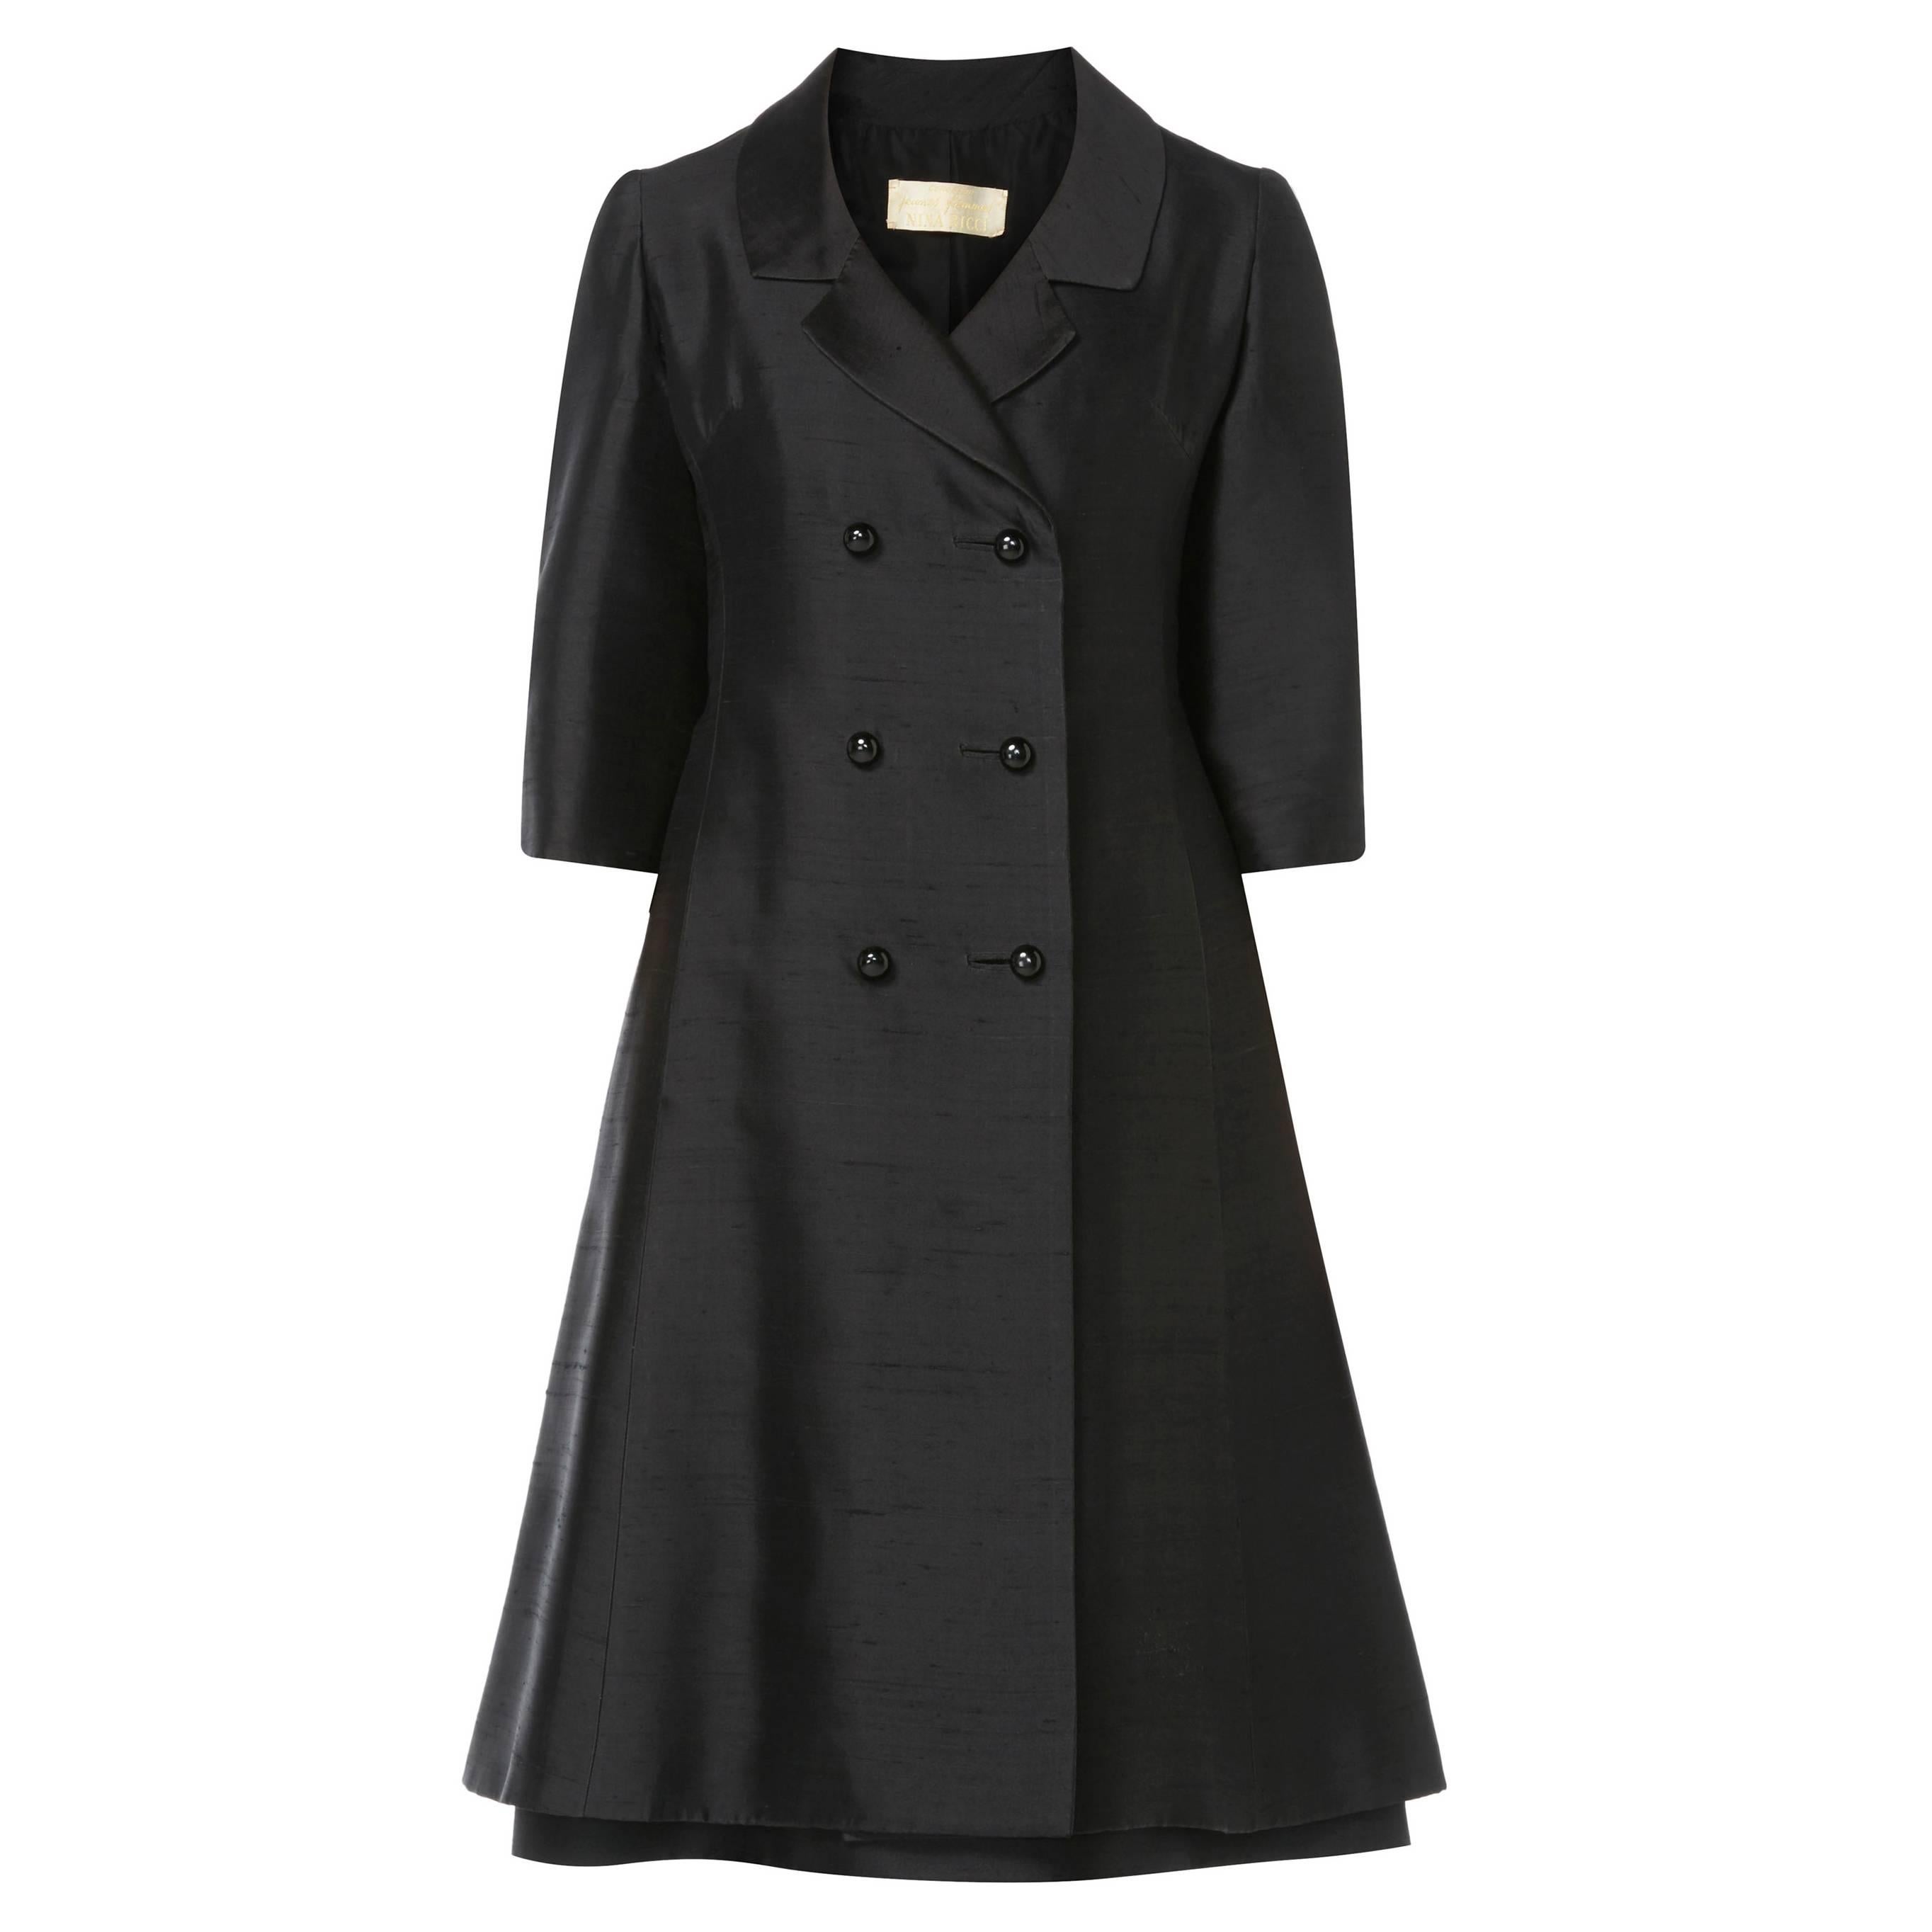 Nina Ricci black dress & coat, circa 1967